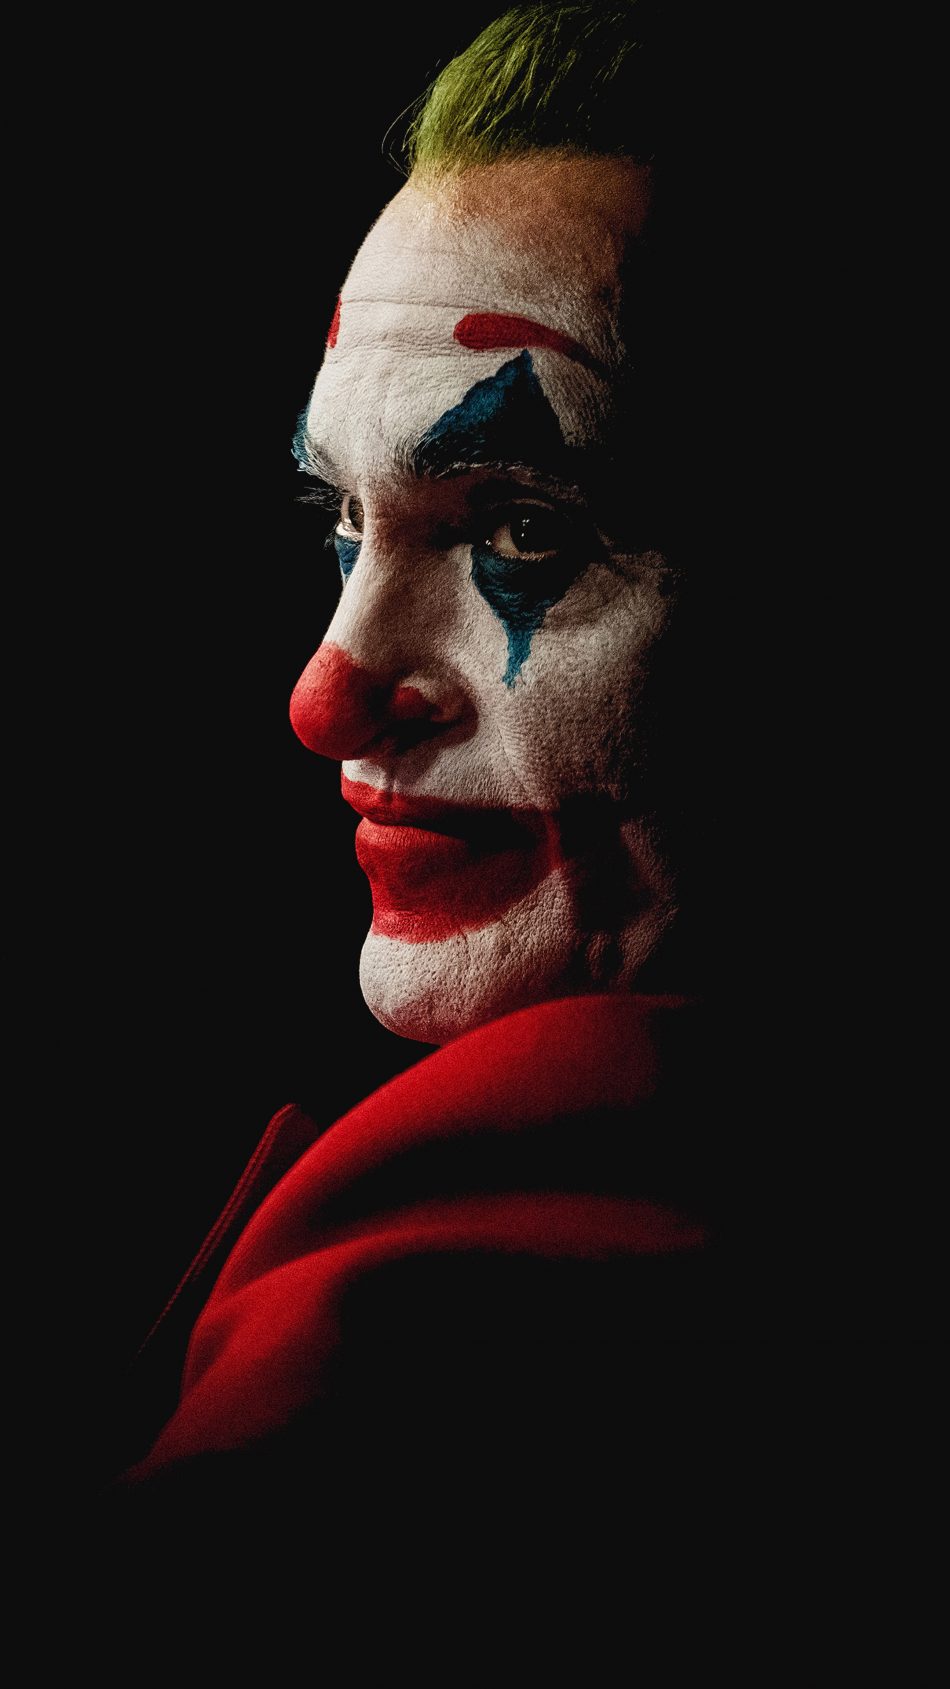 35 Gambar Wallpaper Hd Joker terbaru 2020